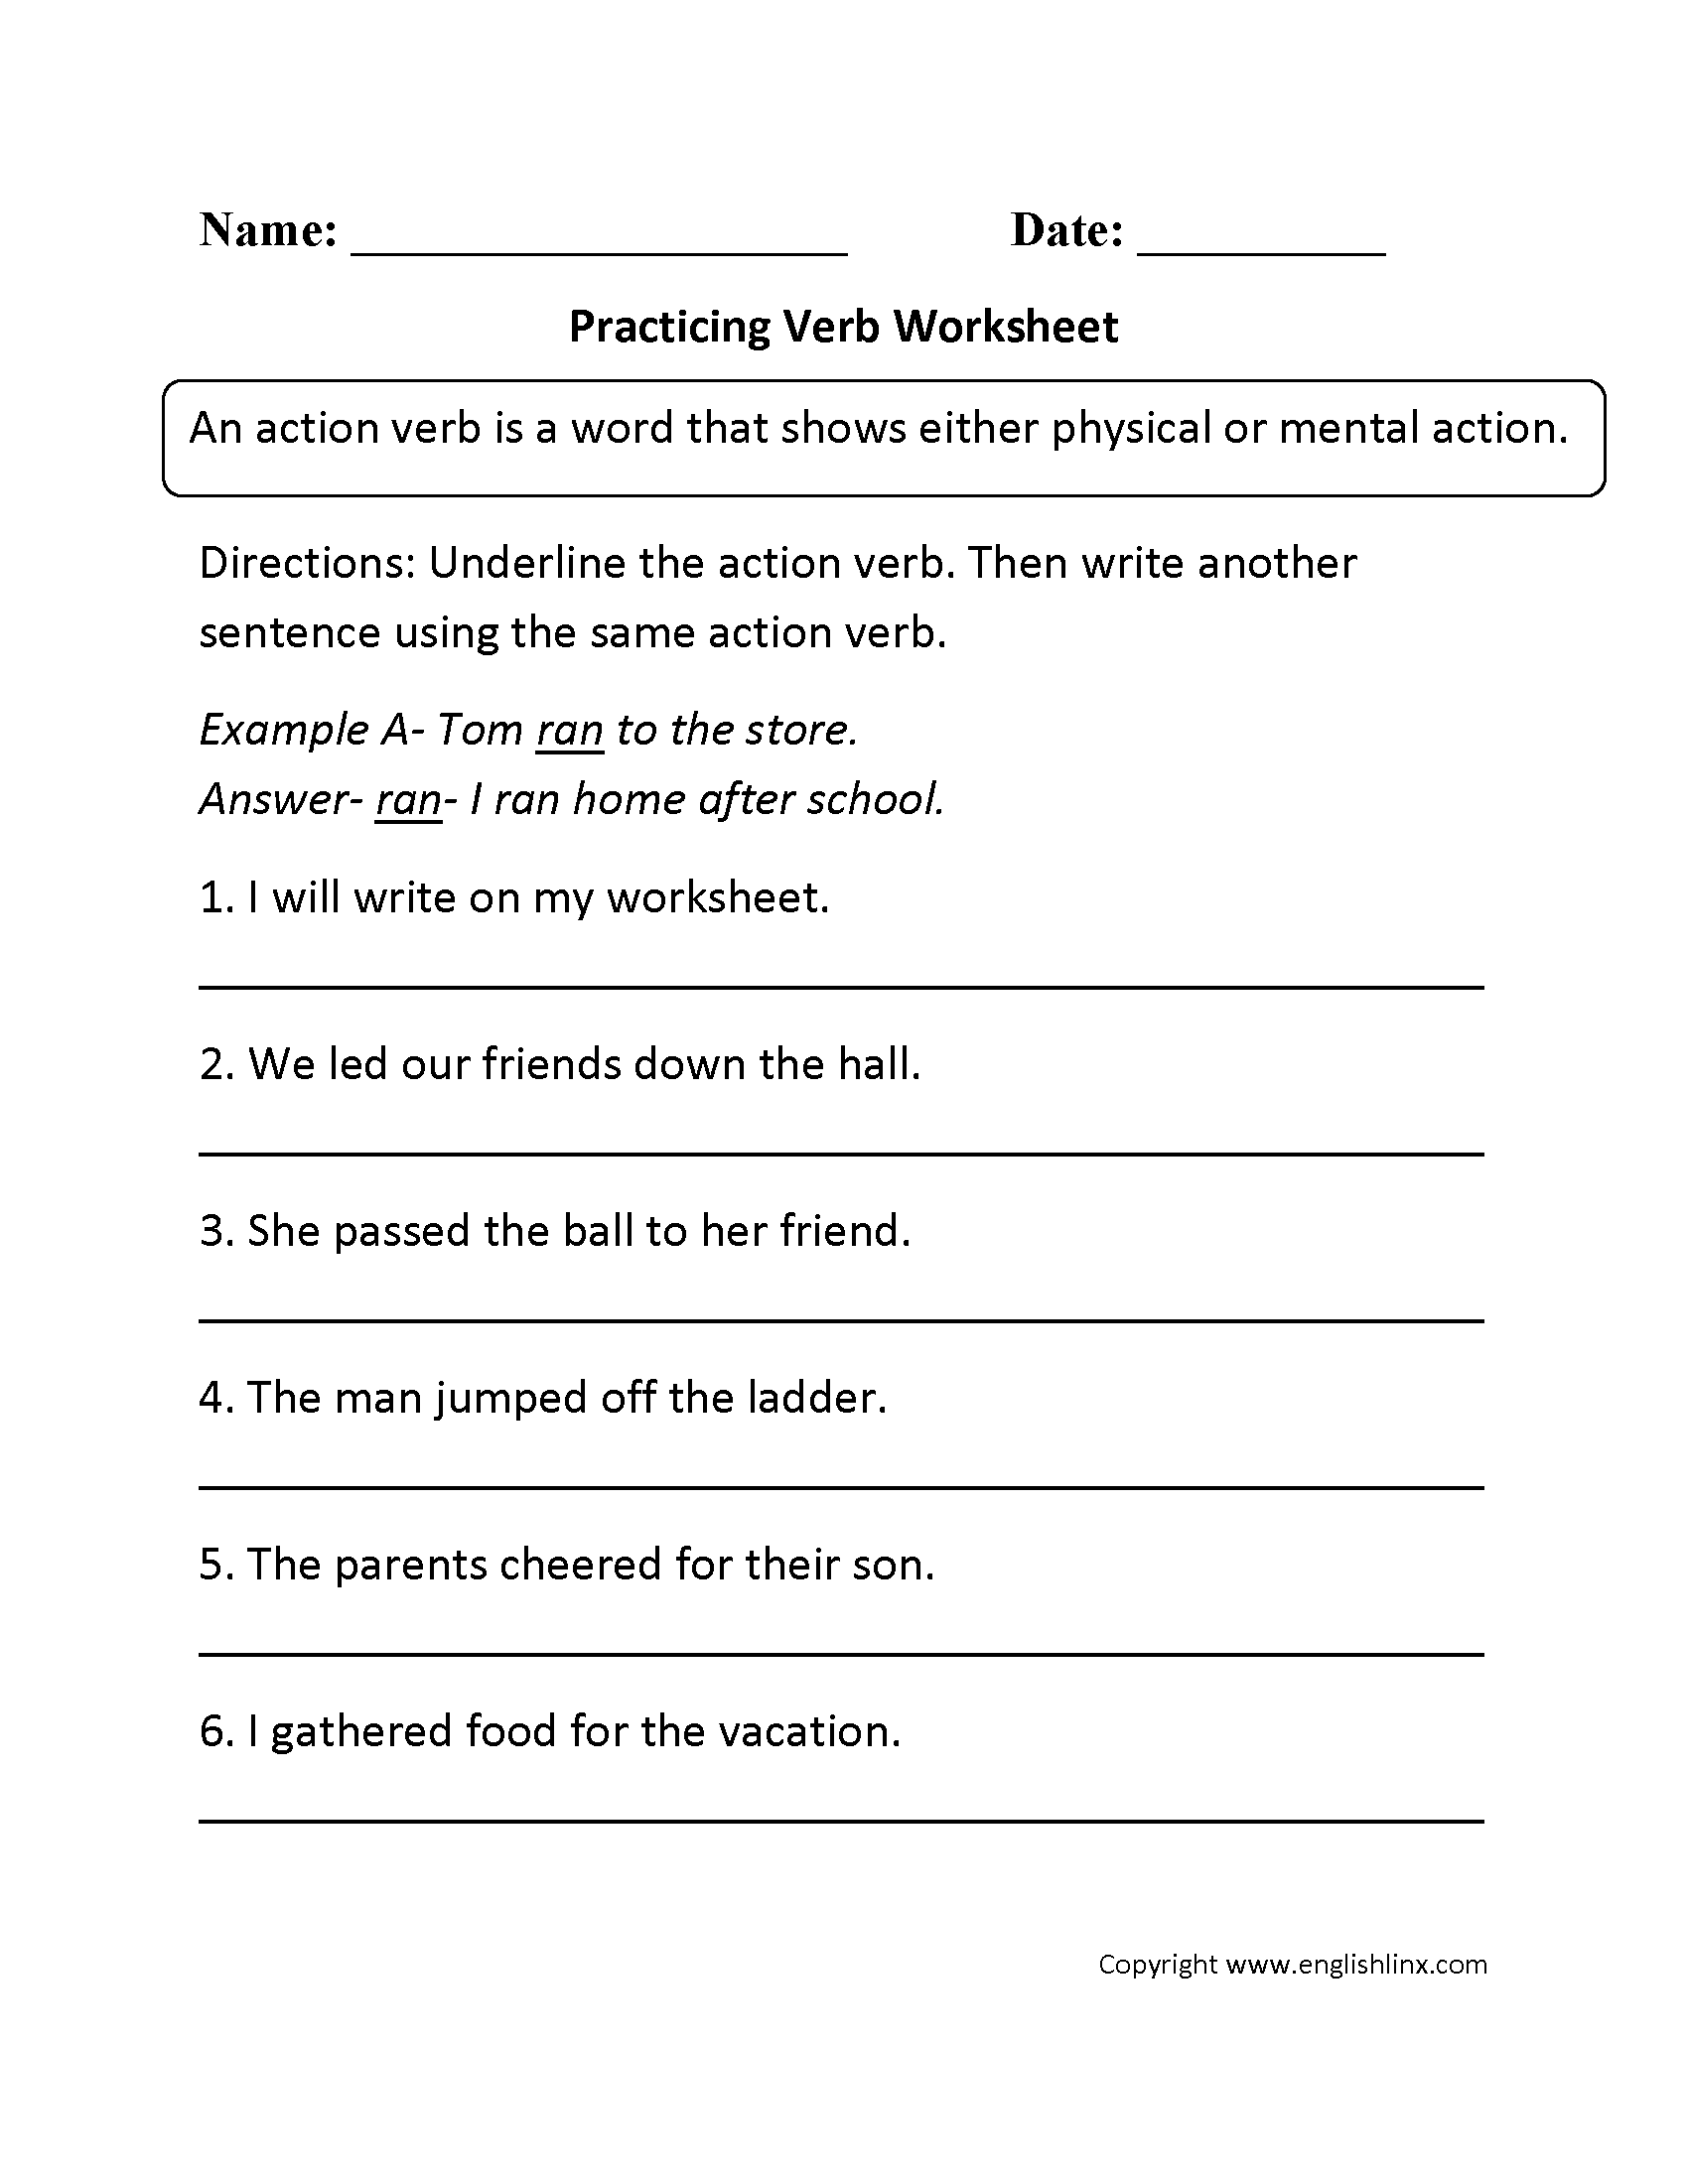 verbs-worksheets-subject-verb-agreement-worksheets